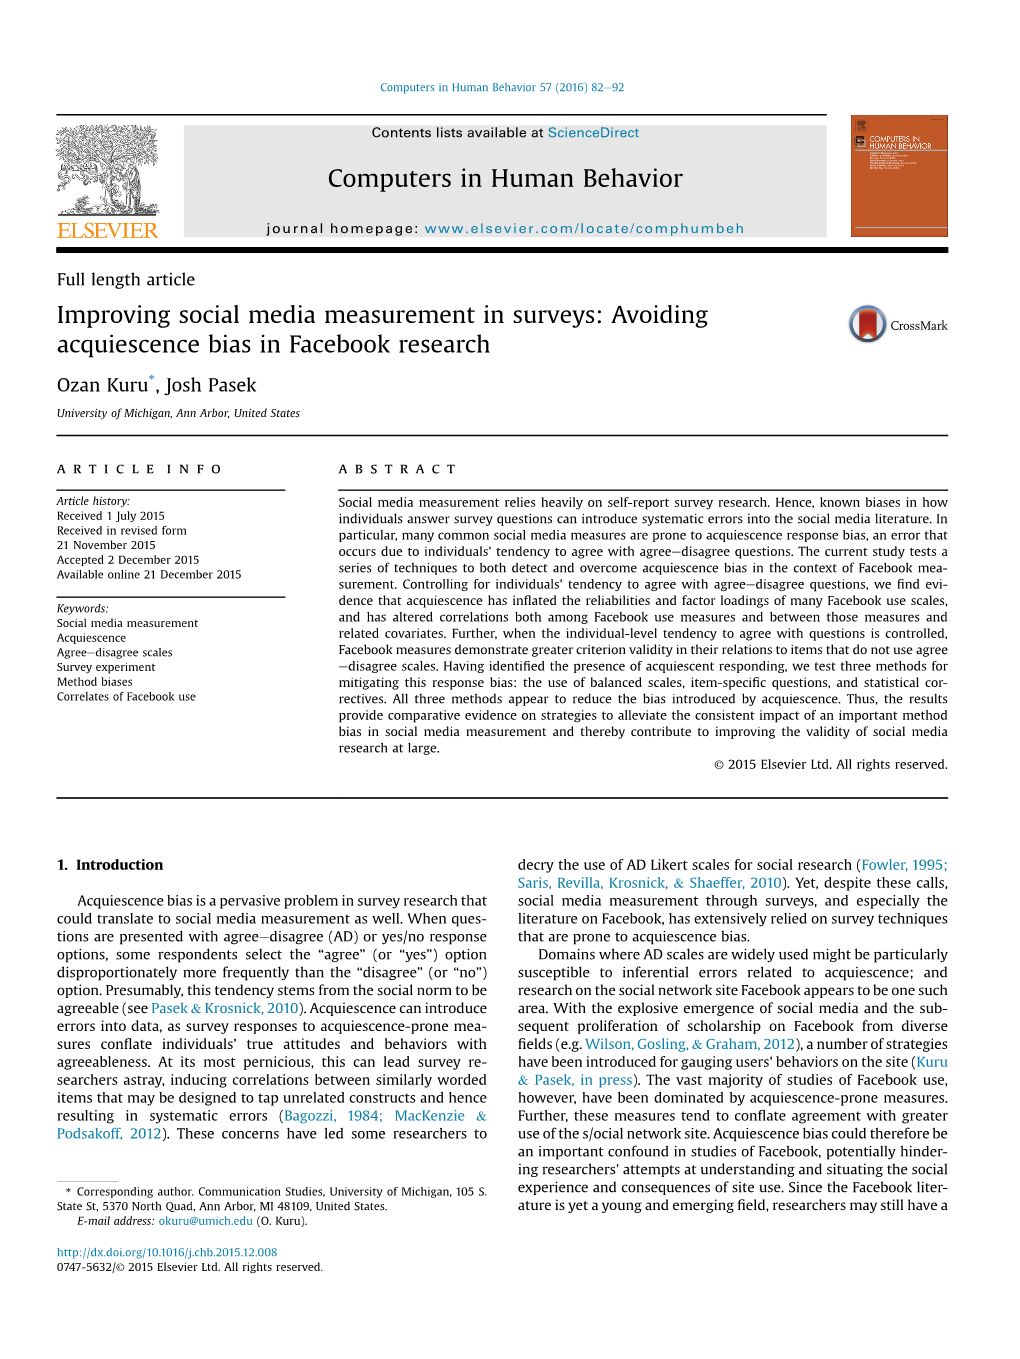 Improving Social Media Measurement in Surveys: Avoiding Acquiescence Bias in Facebook Research